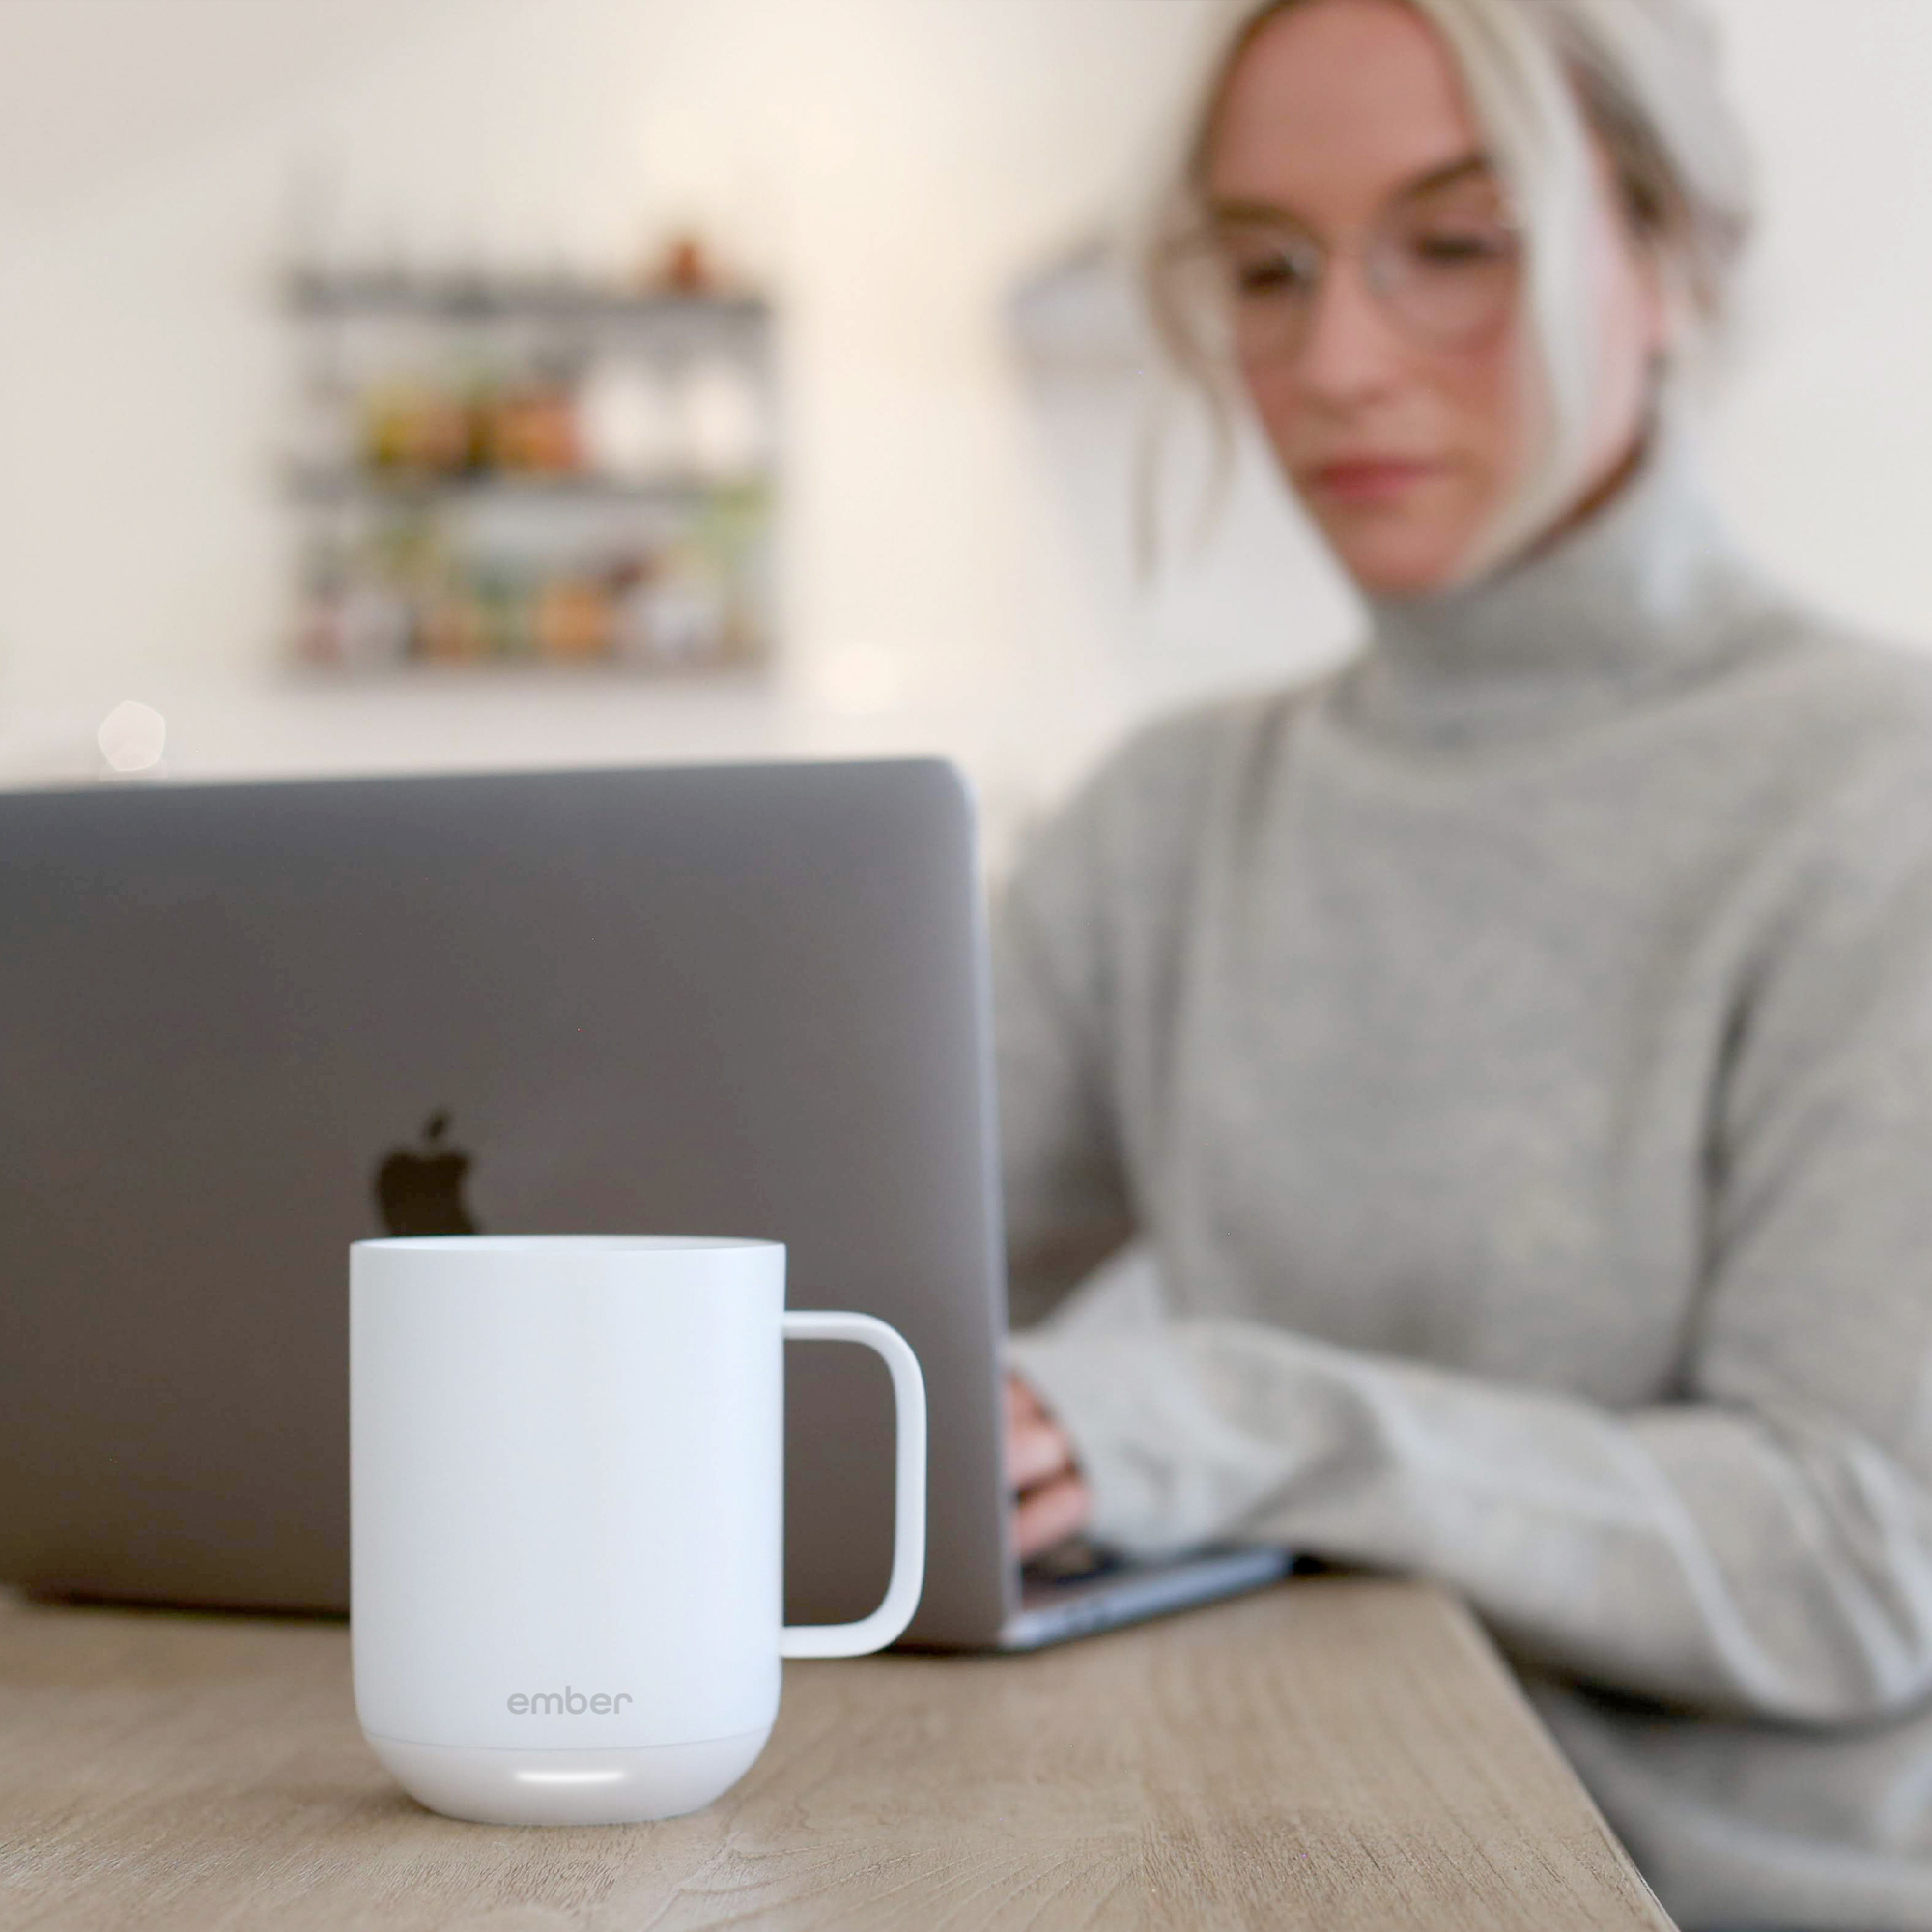 Ember Temperature Control Smart Mug 2, 10 oz, White, 1.5-hr Battery Life - App Controlled Heated Coffee Mug - Improved Design - image 8 of 9